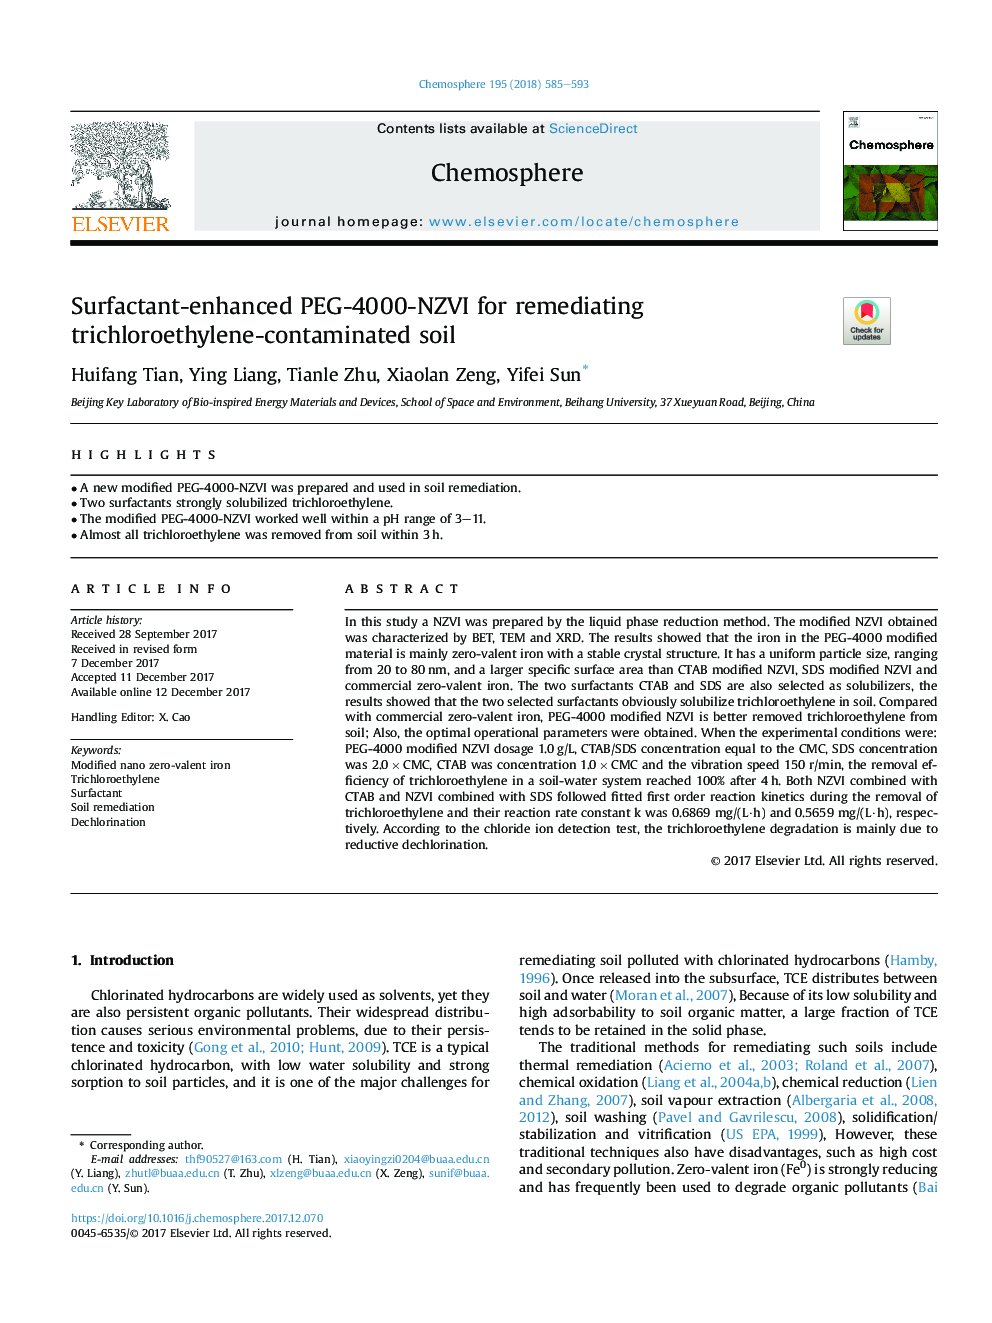 Surfactant-enhanced PEG-4000-NZVI for remediating trichloroethylene-contaminated soil